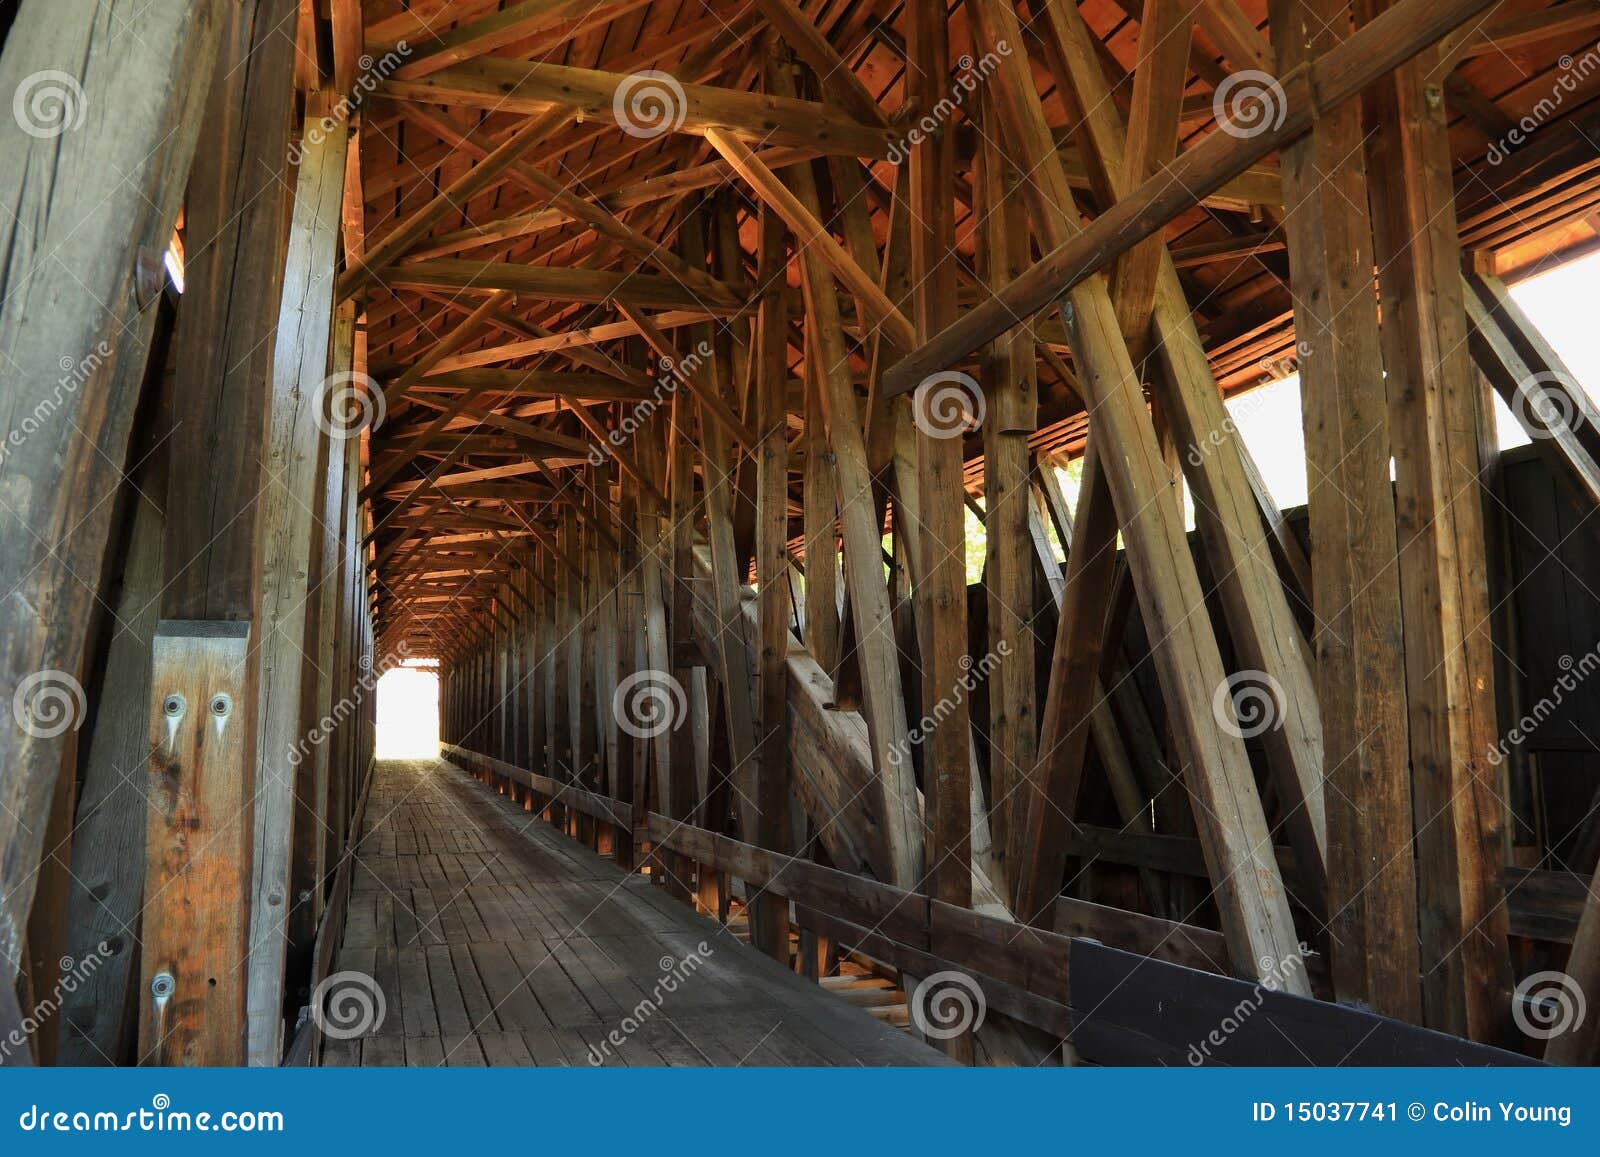 Blenheim Covered Bridge Interior Stock Image Image Of